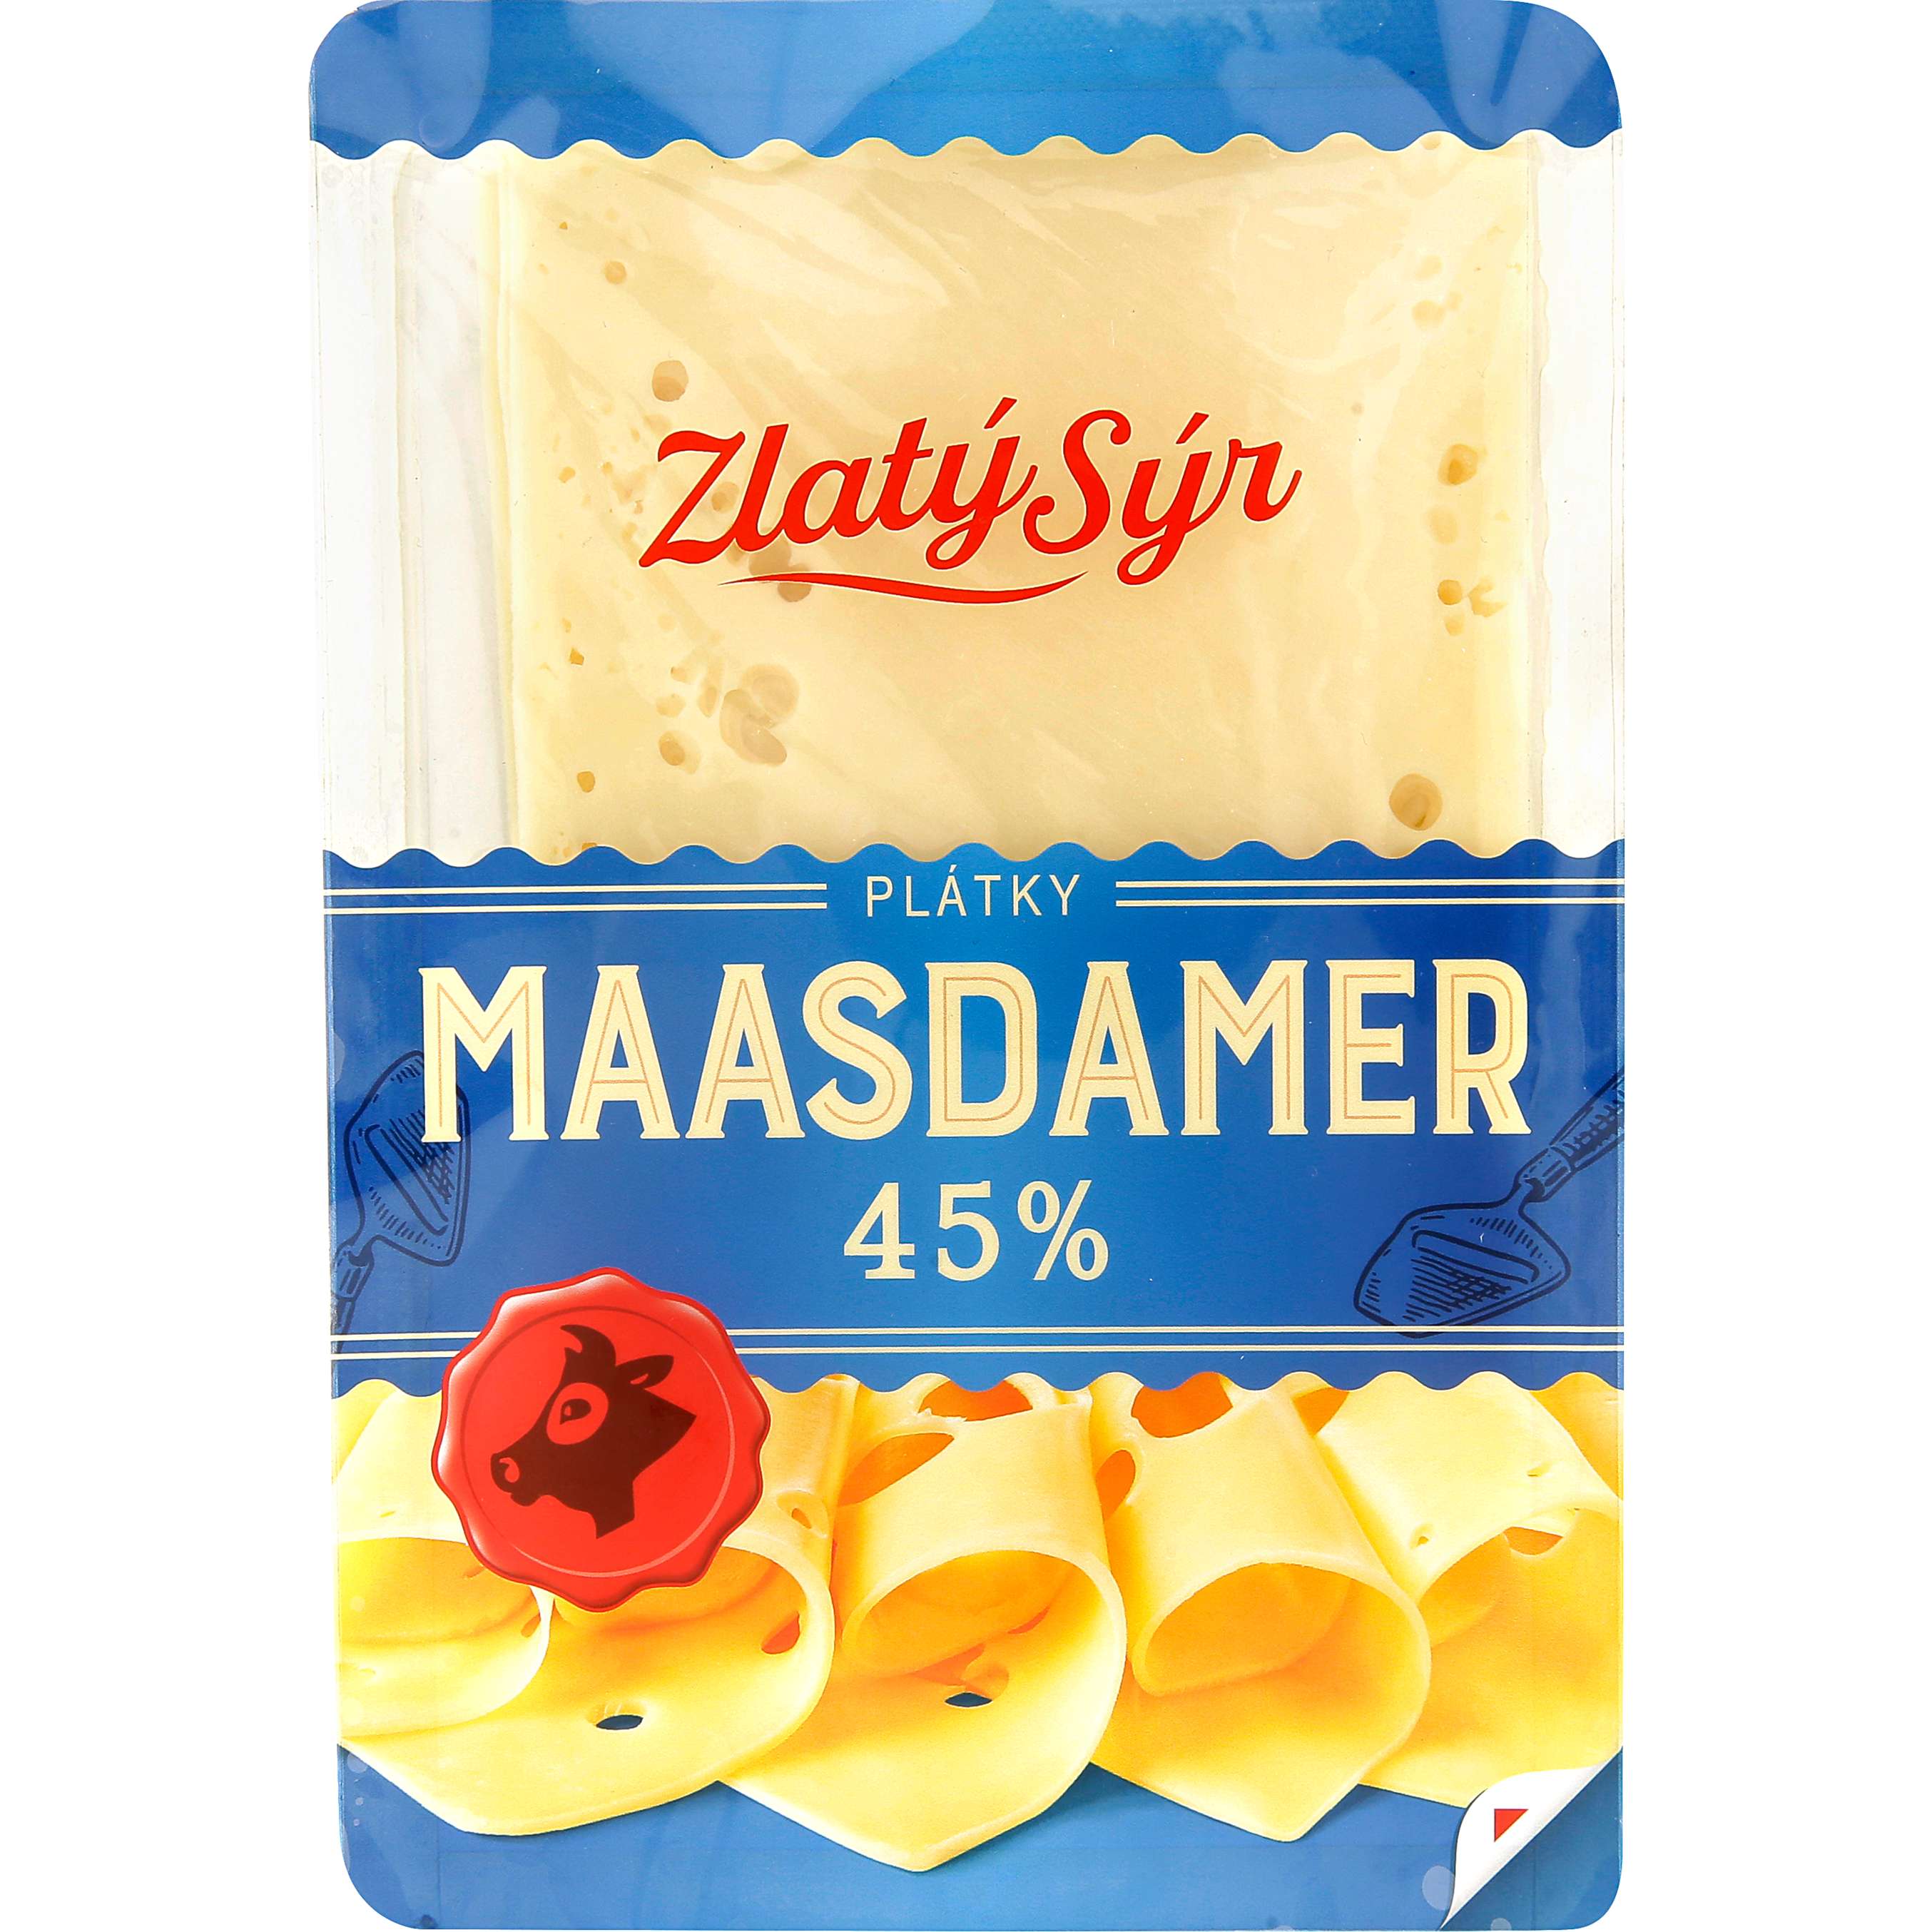 Zobrazit nabídku Maasdamer Plátkový sýr